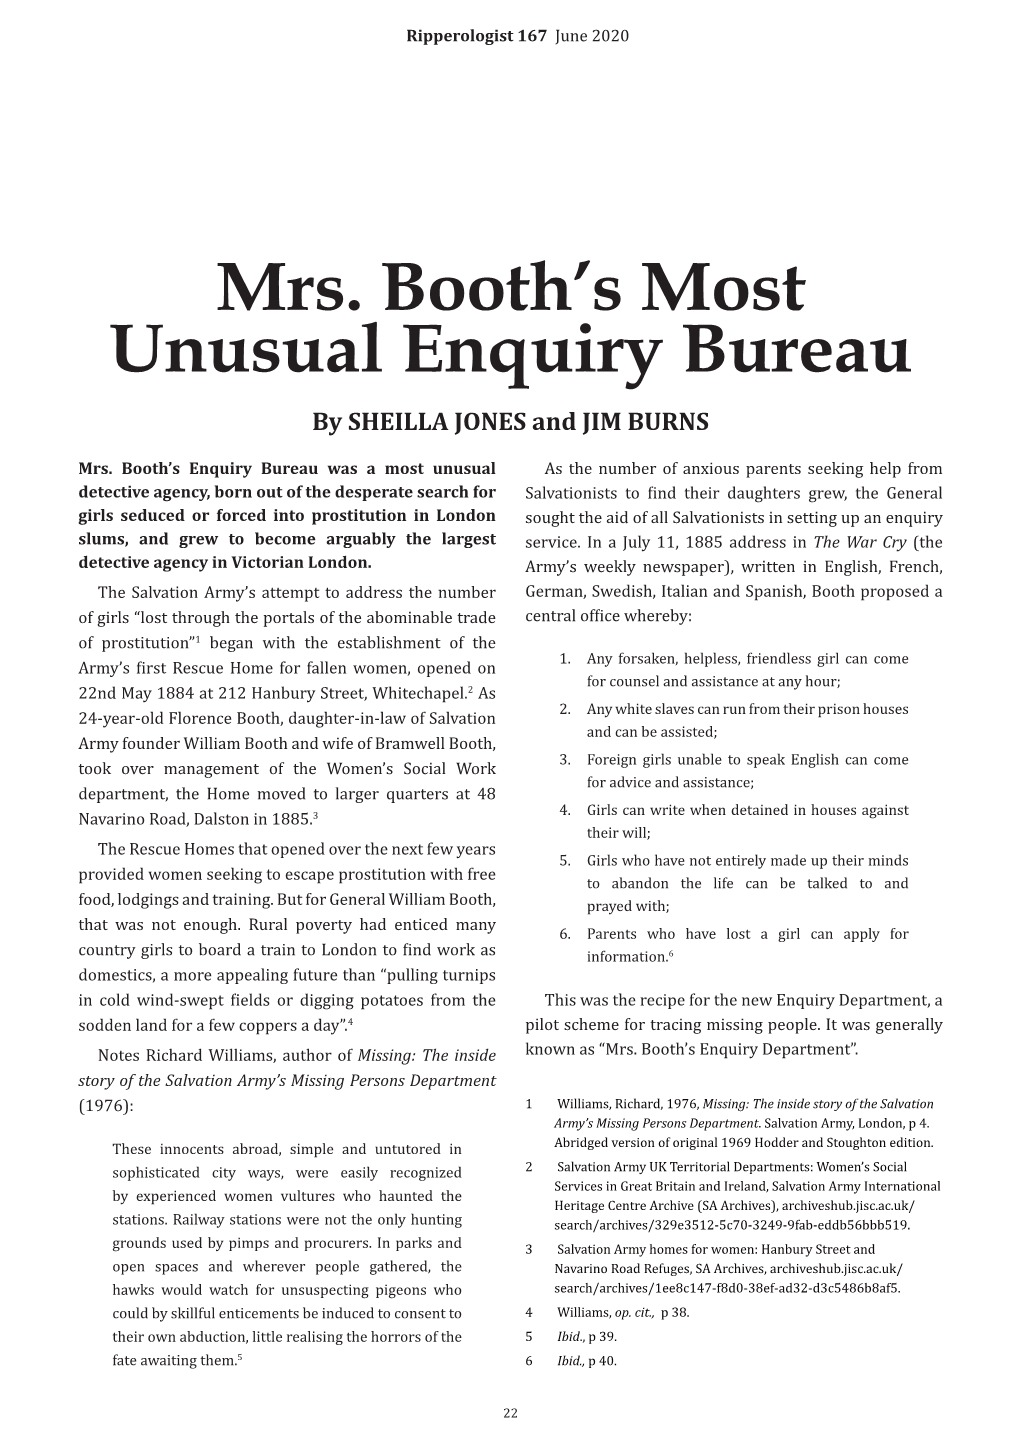 Mrs. Booth's Most Unusual Enquiry Bureau